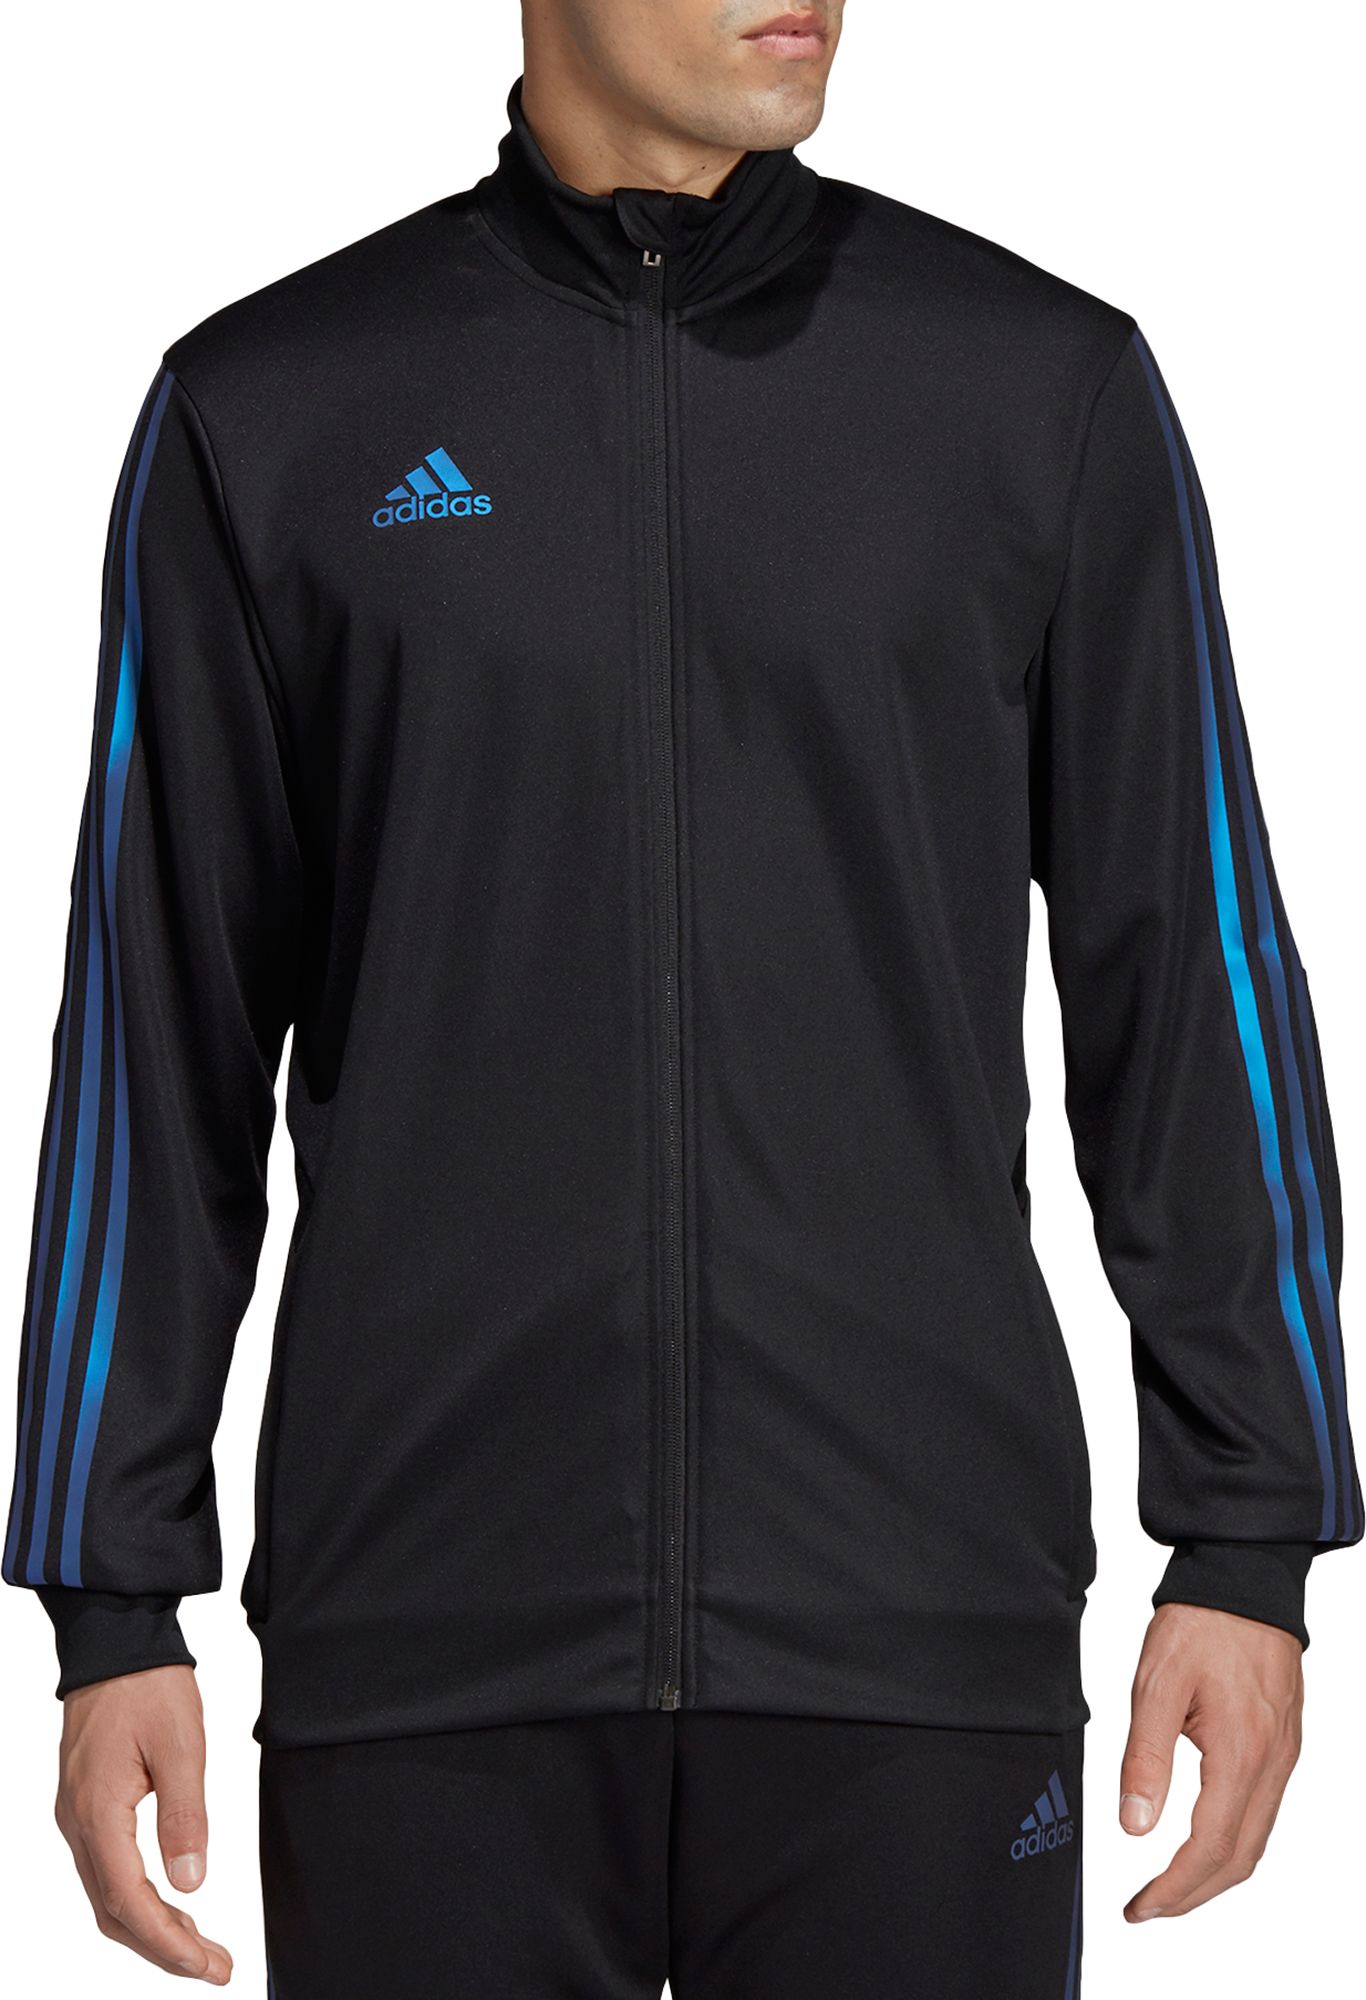 mens blue adidas track jacket